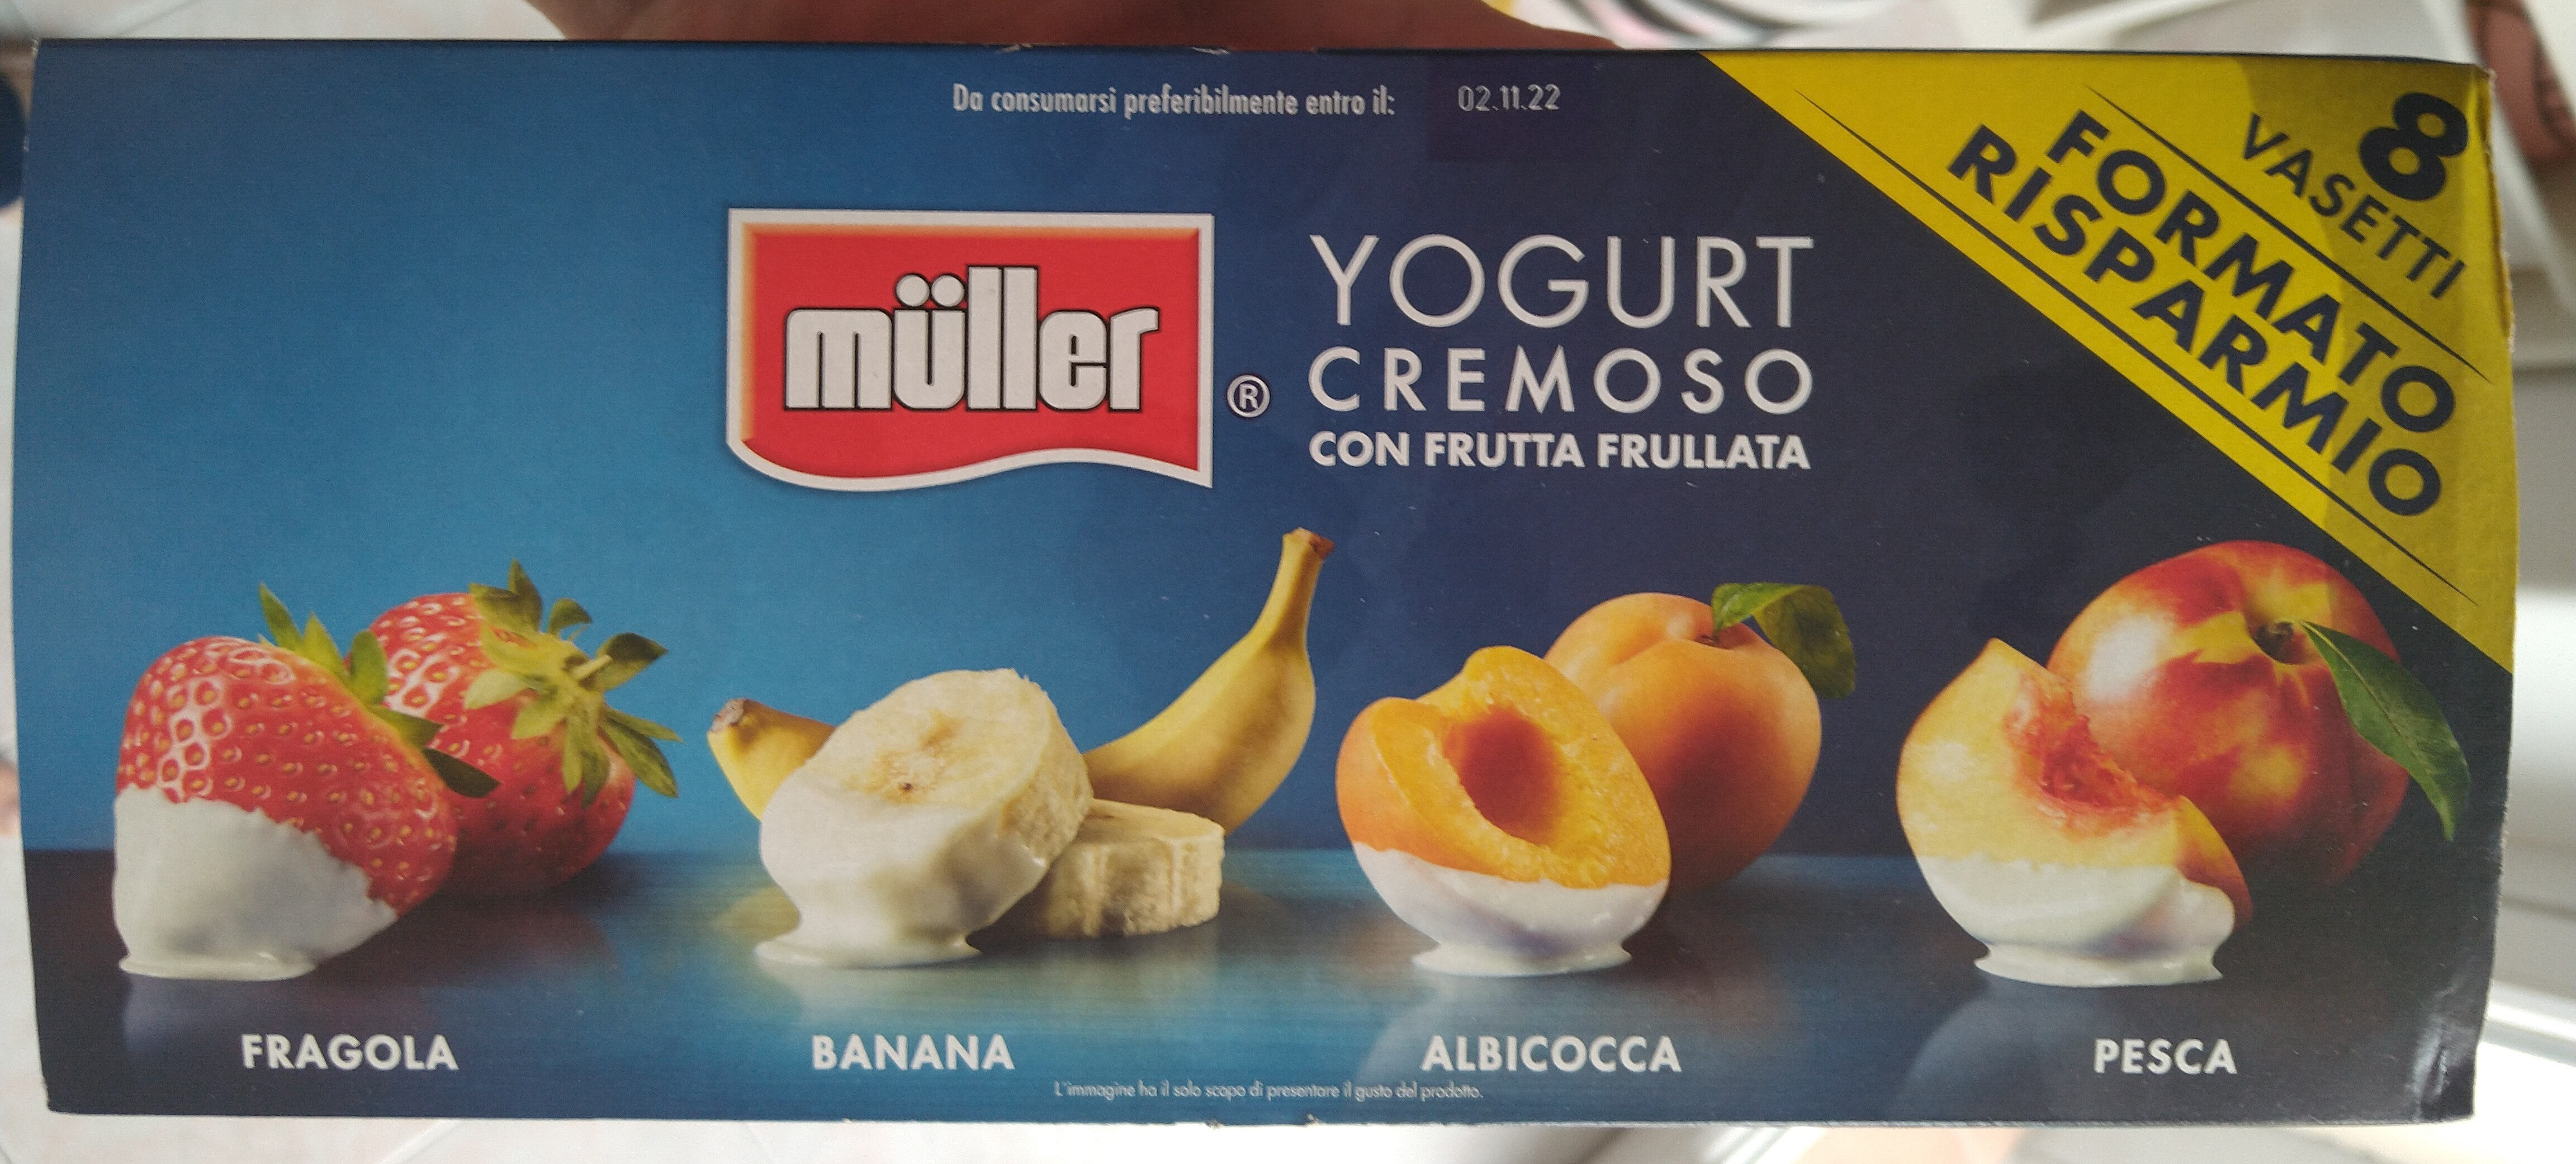 Yogurt cremoso con frutta frullata - Produit - it